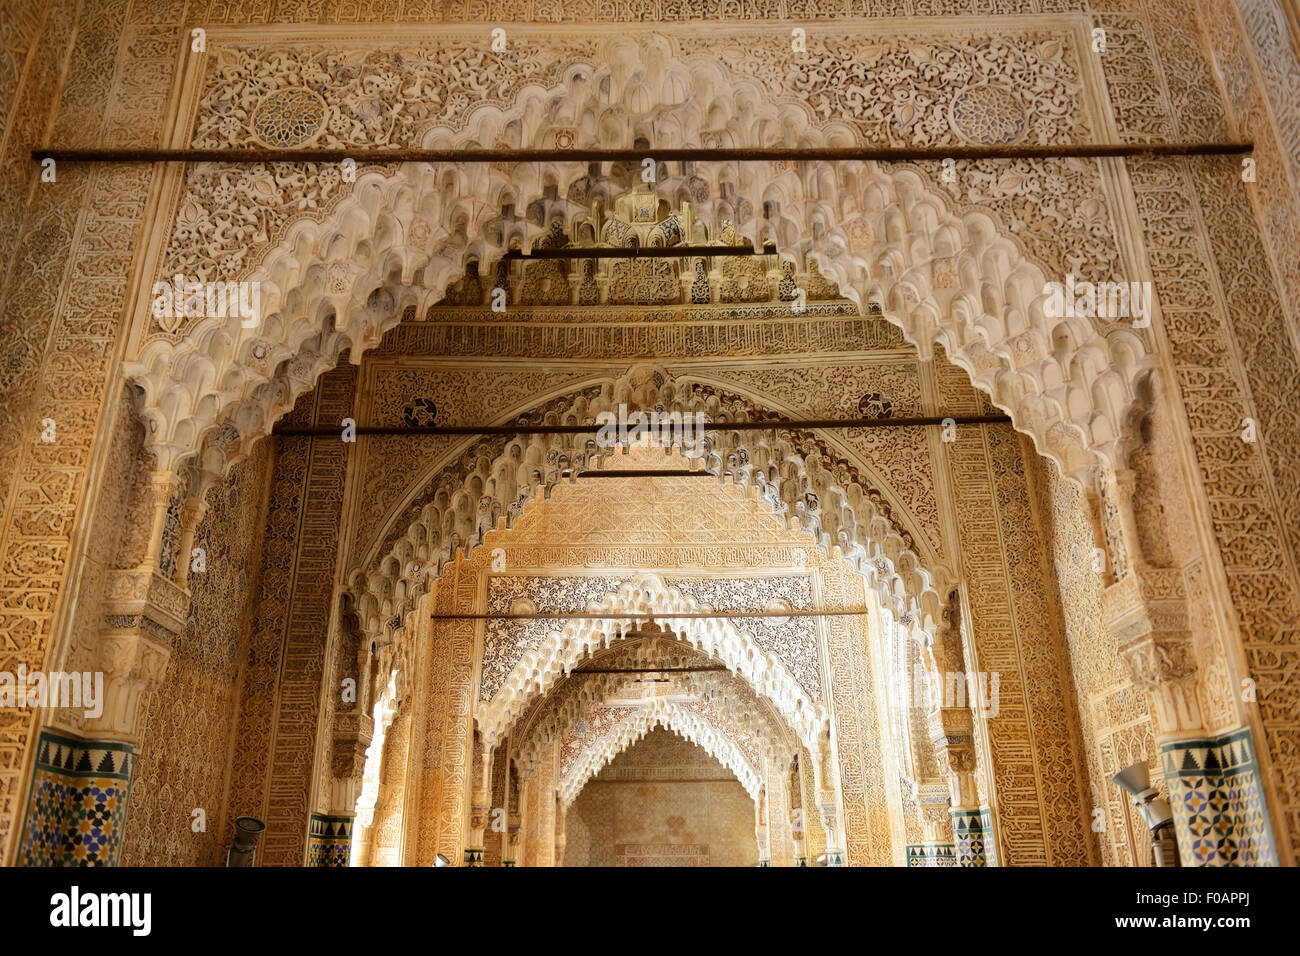 Le Palacio de los Leones dans complexe de l'Alhambra, Granada, Andalousie, Espagne Banque D'Images